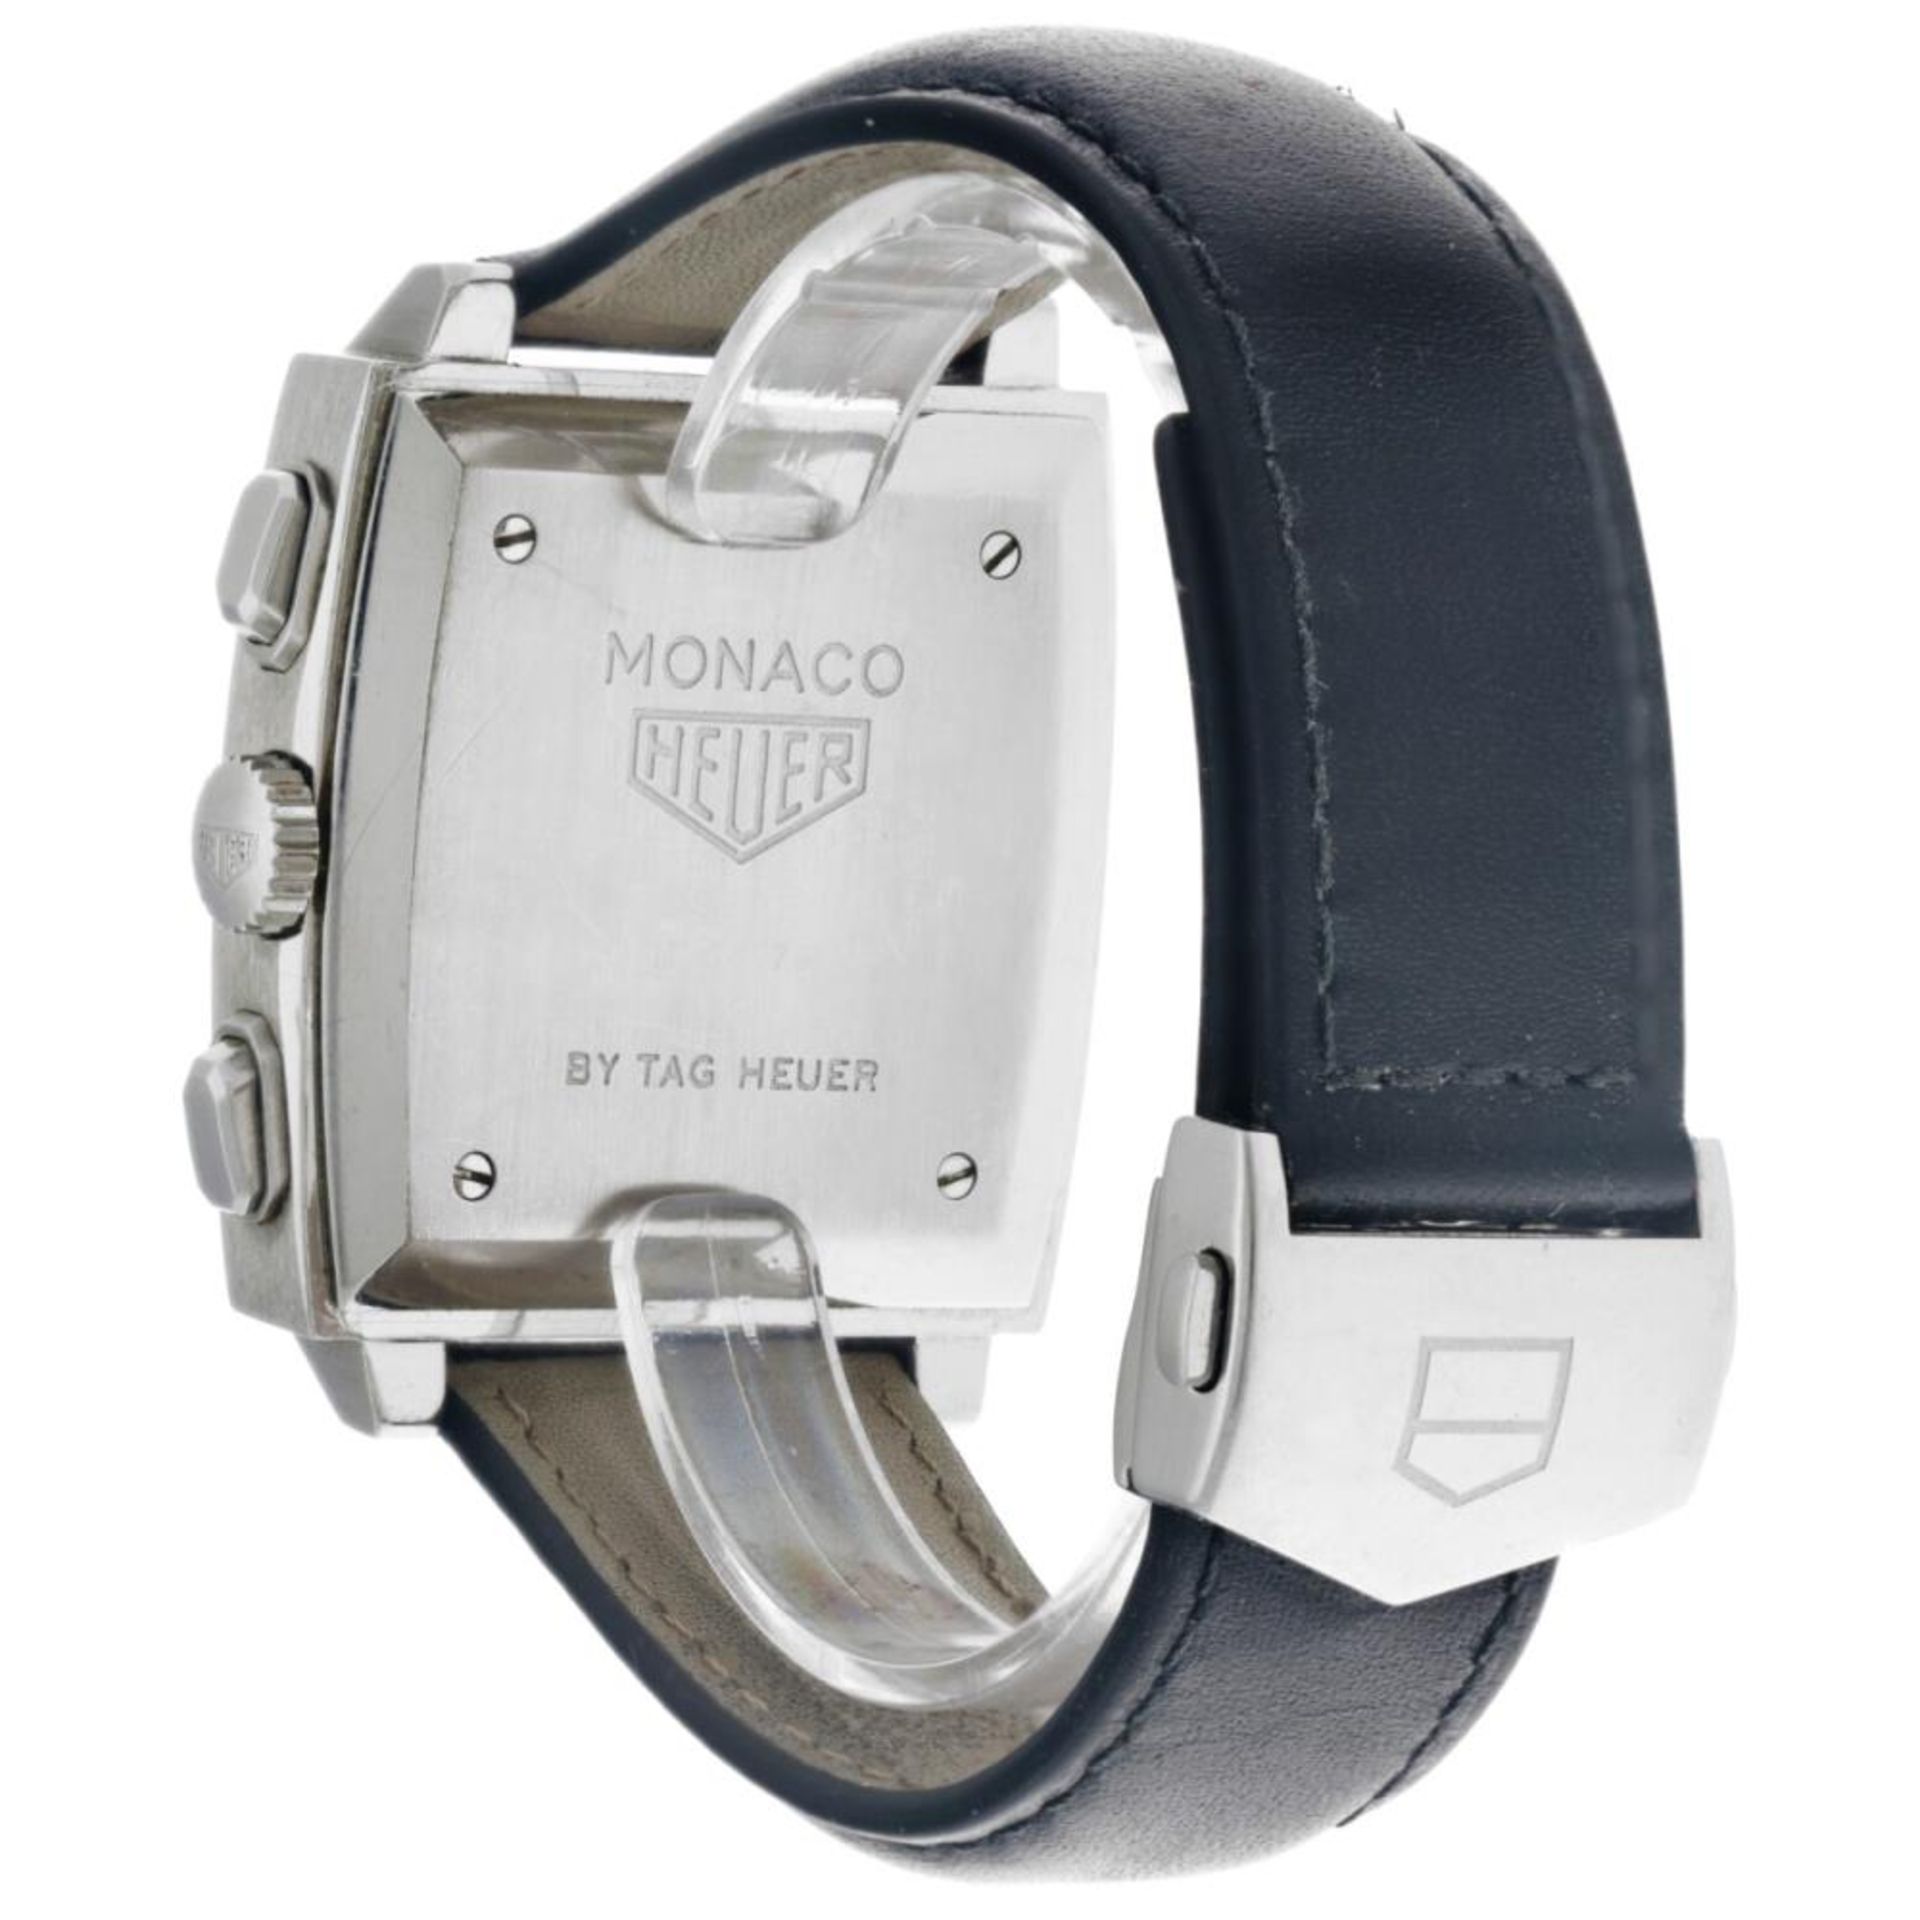 Tag Heuer Monaco CS2111 - Men's watch - approx. 2000. - Image 3 of 6